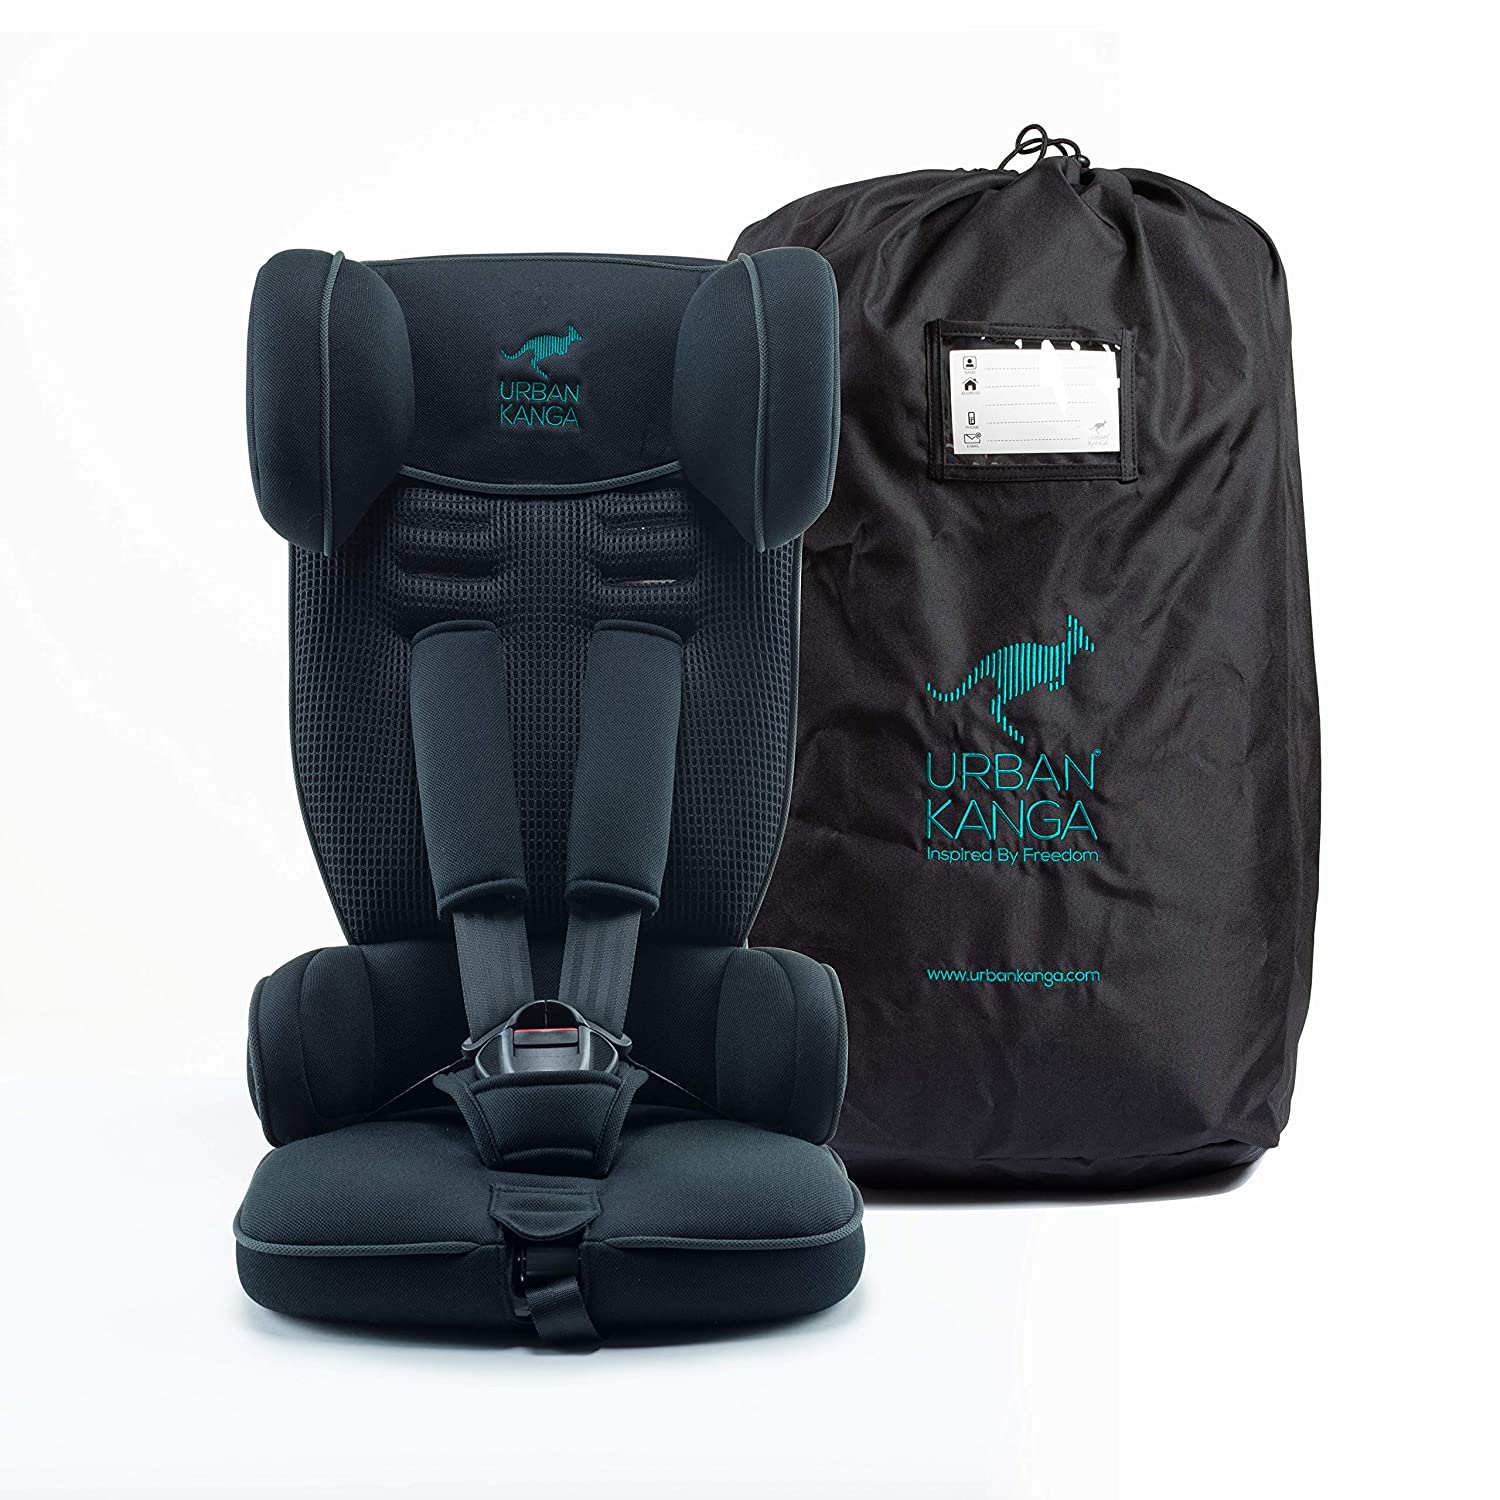 Urban Kanga Car Seat Portable and Foldable for Travel Group 1 9-18kg (Uptown TV107) Black